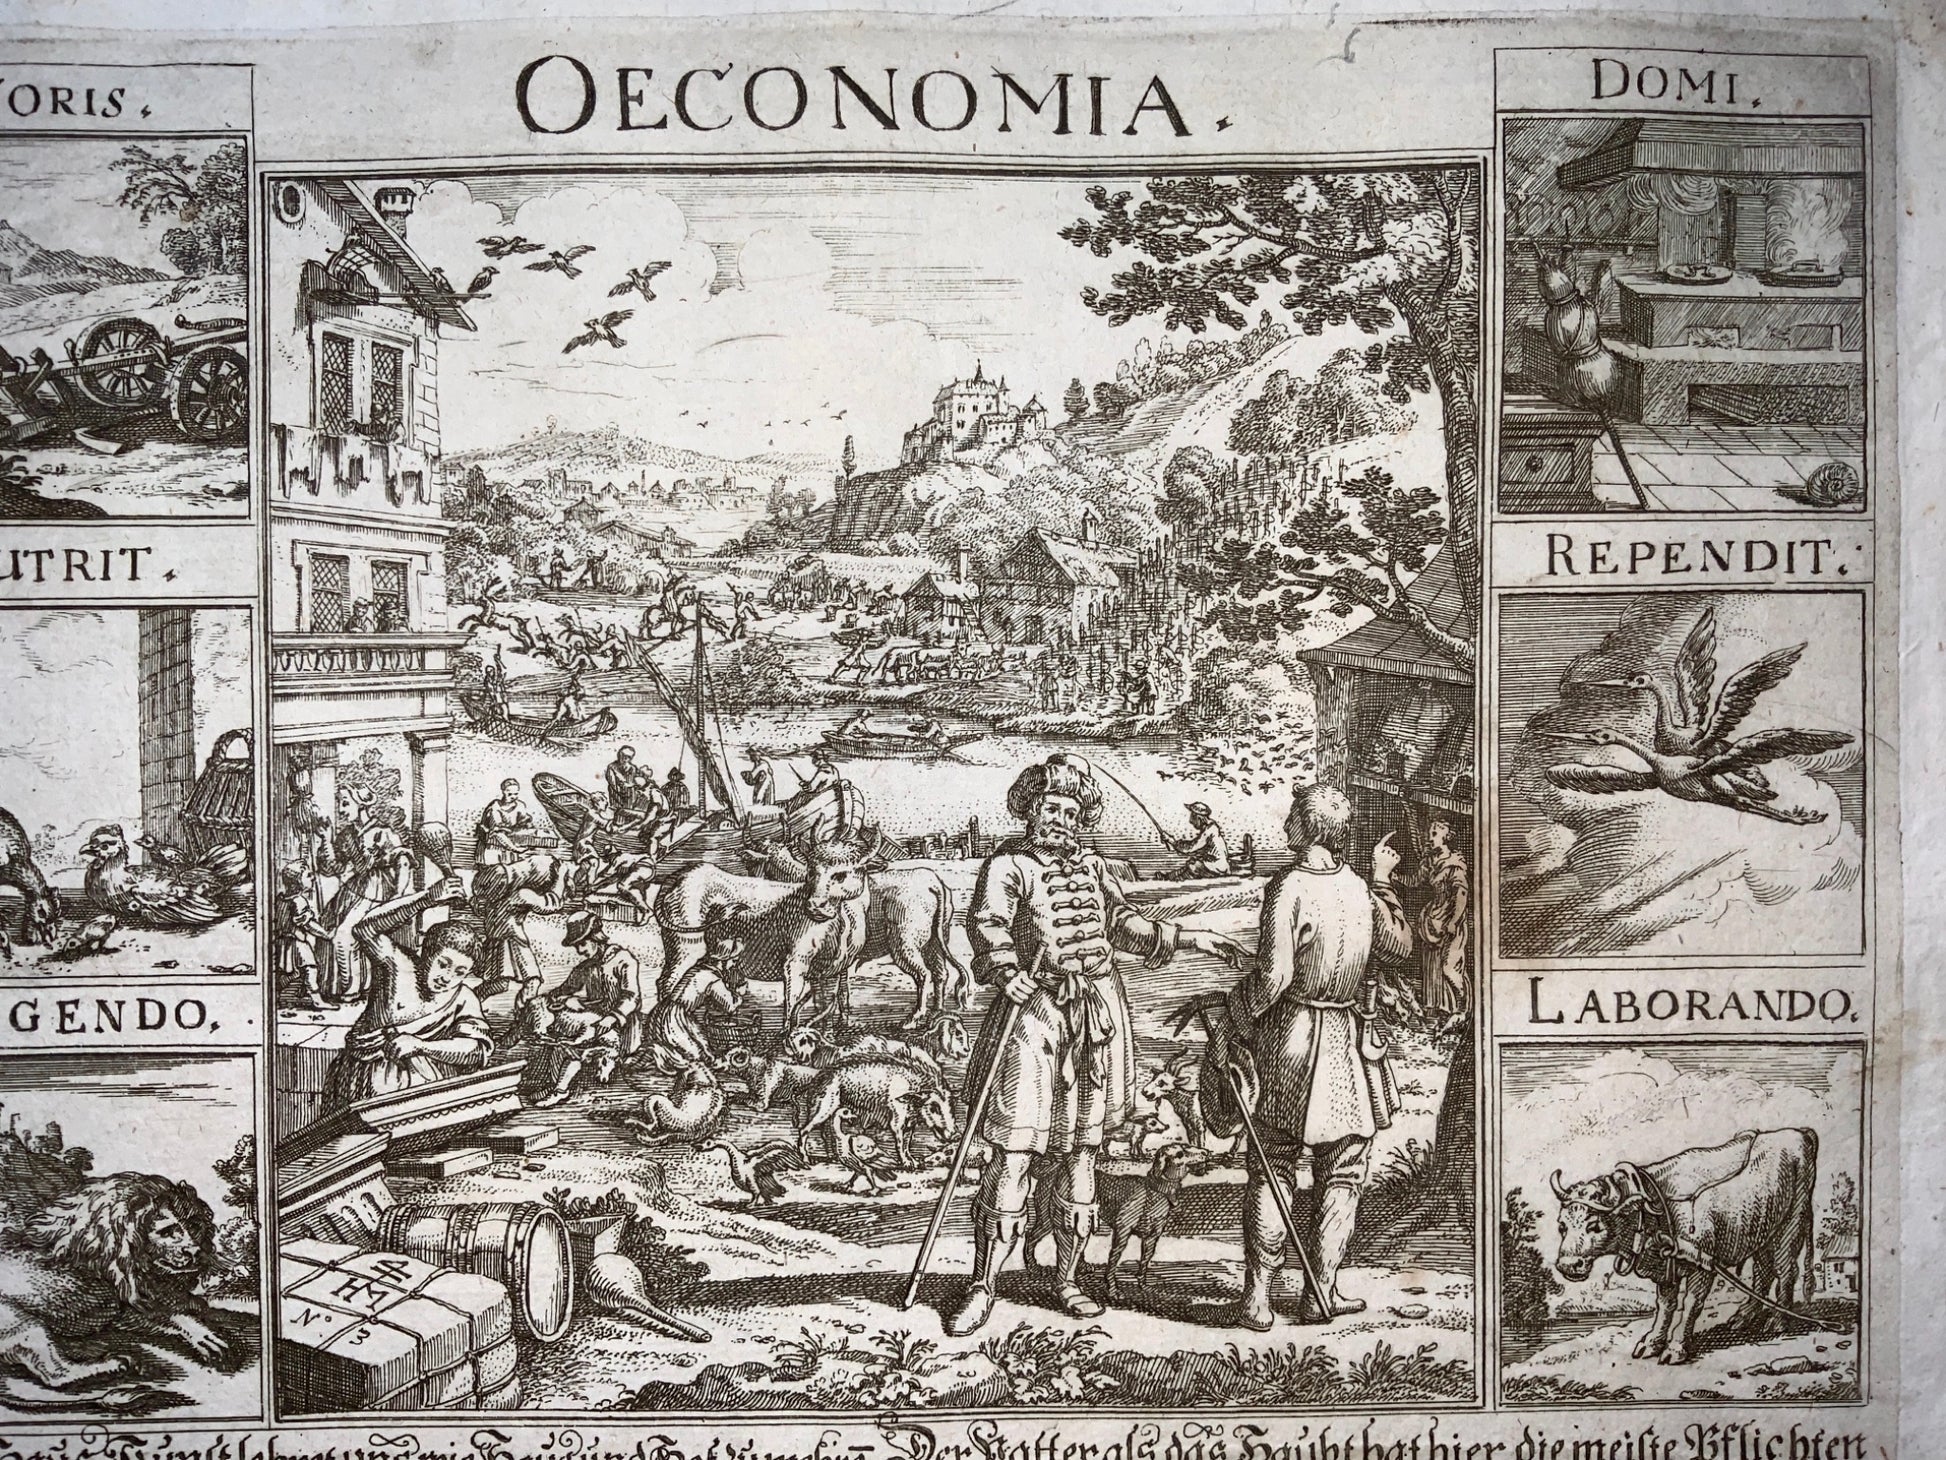 1703 Very Scarce Broadside - ECONOMICS TRADE - OECONOMIA - Johannes Meyer